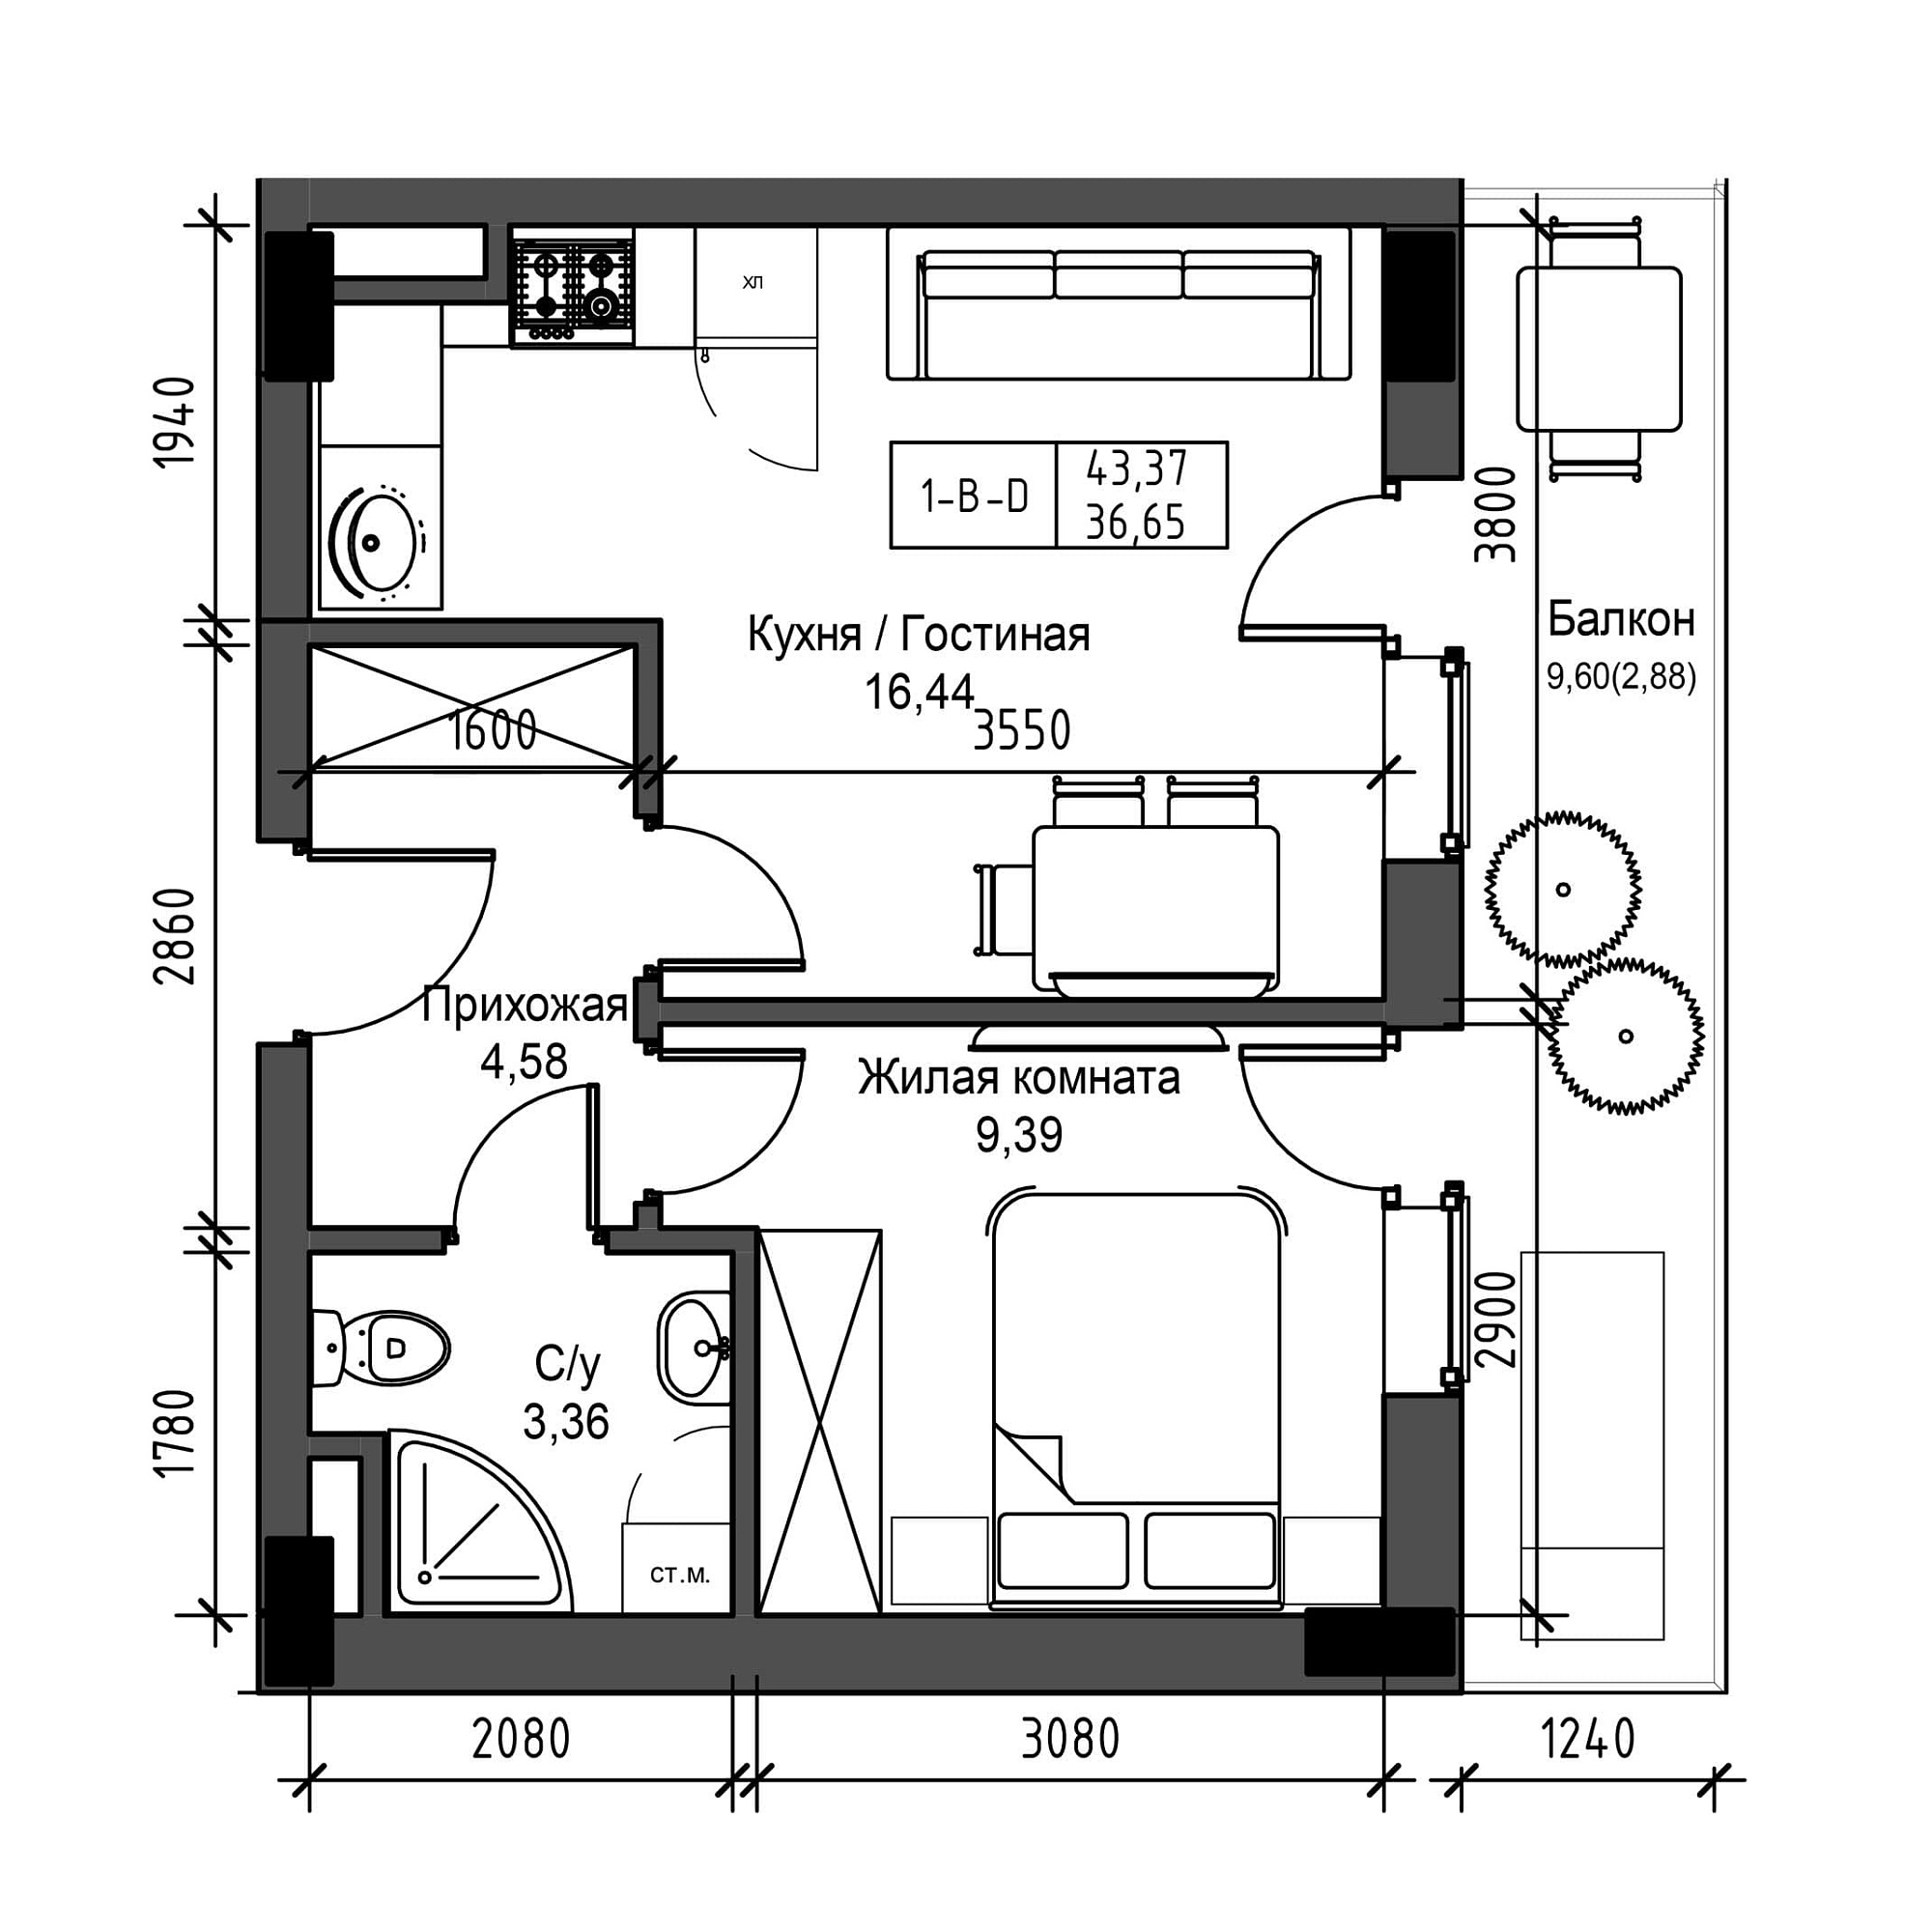 Планування 1-к квартира площею 36.65м2, UM-001-05/0002.